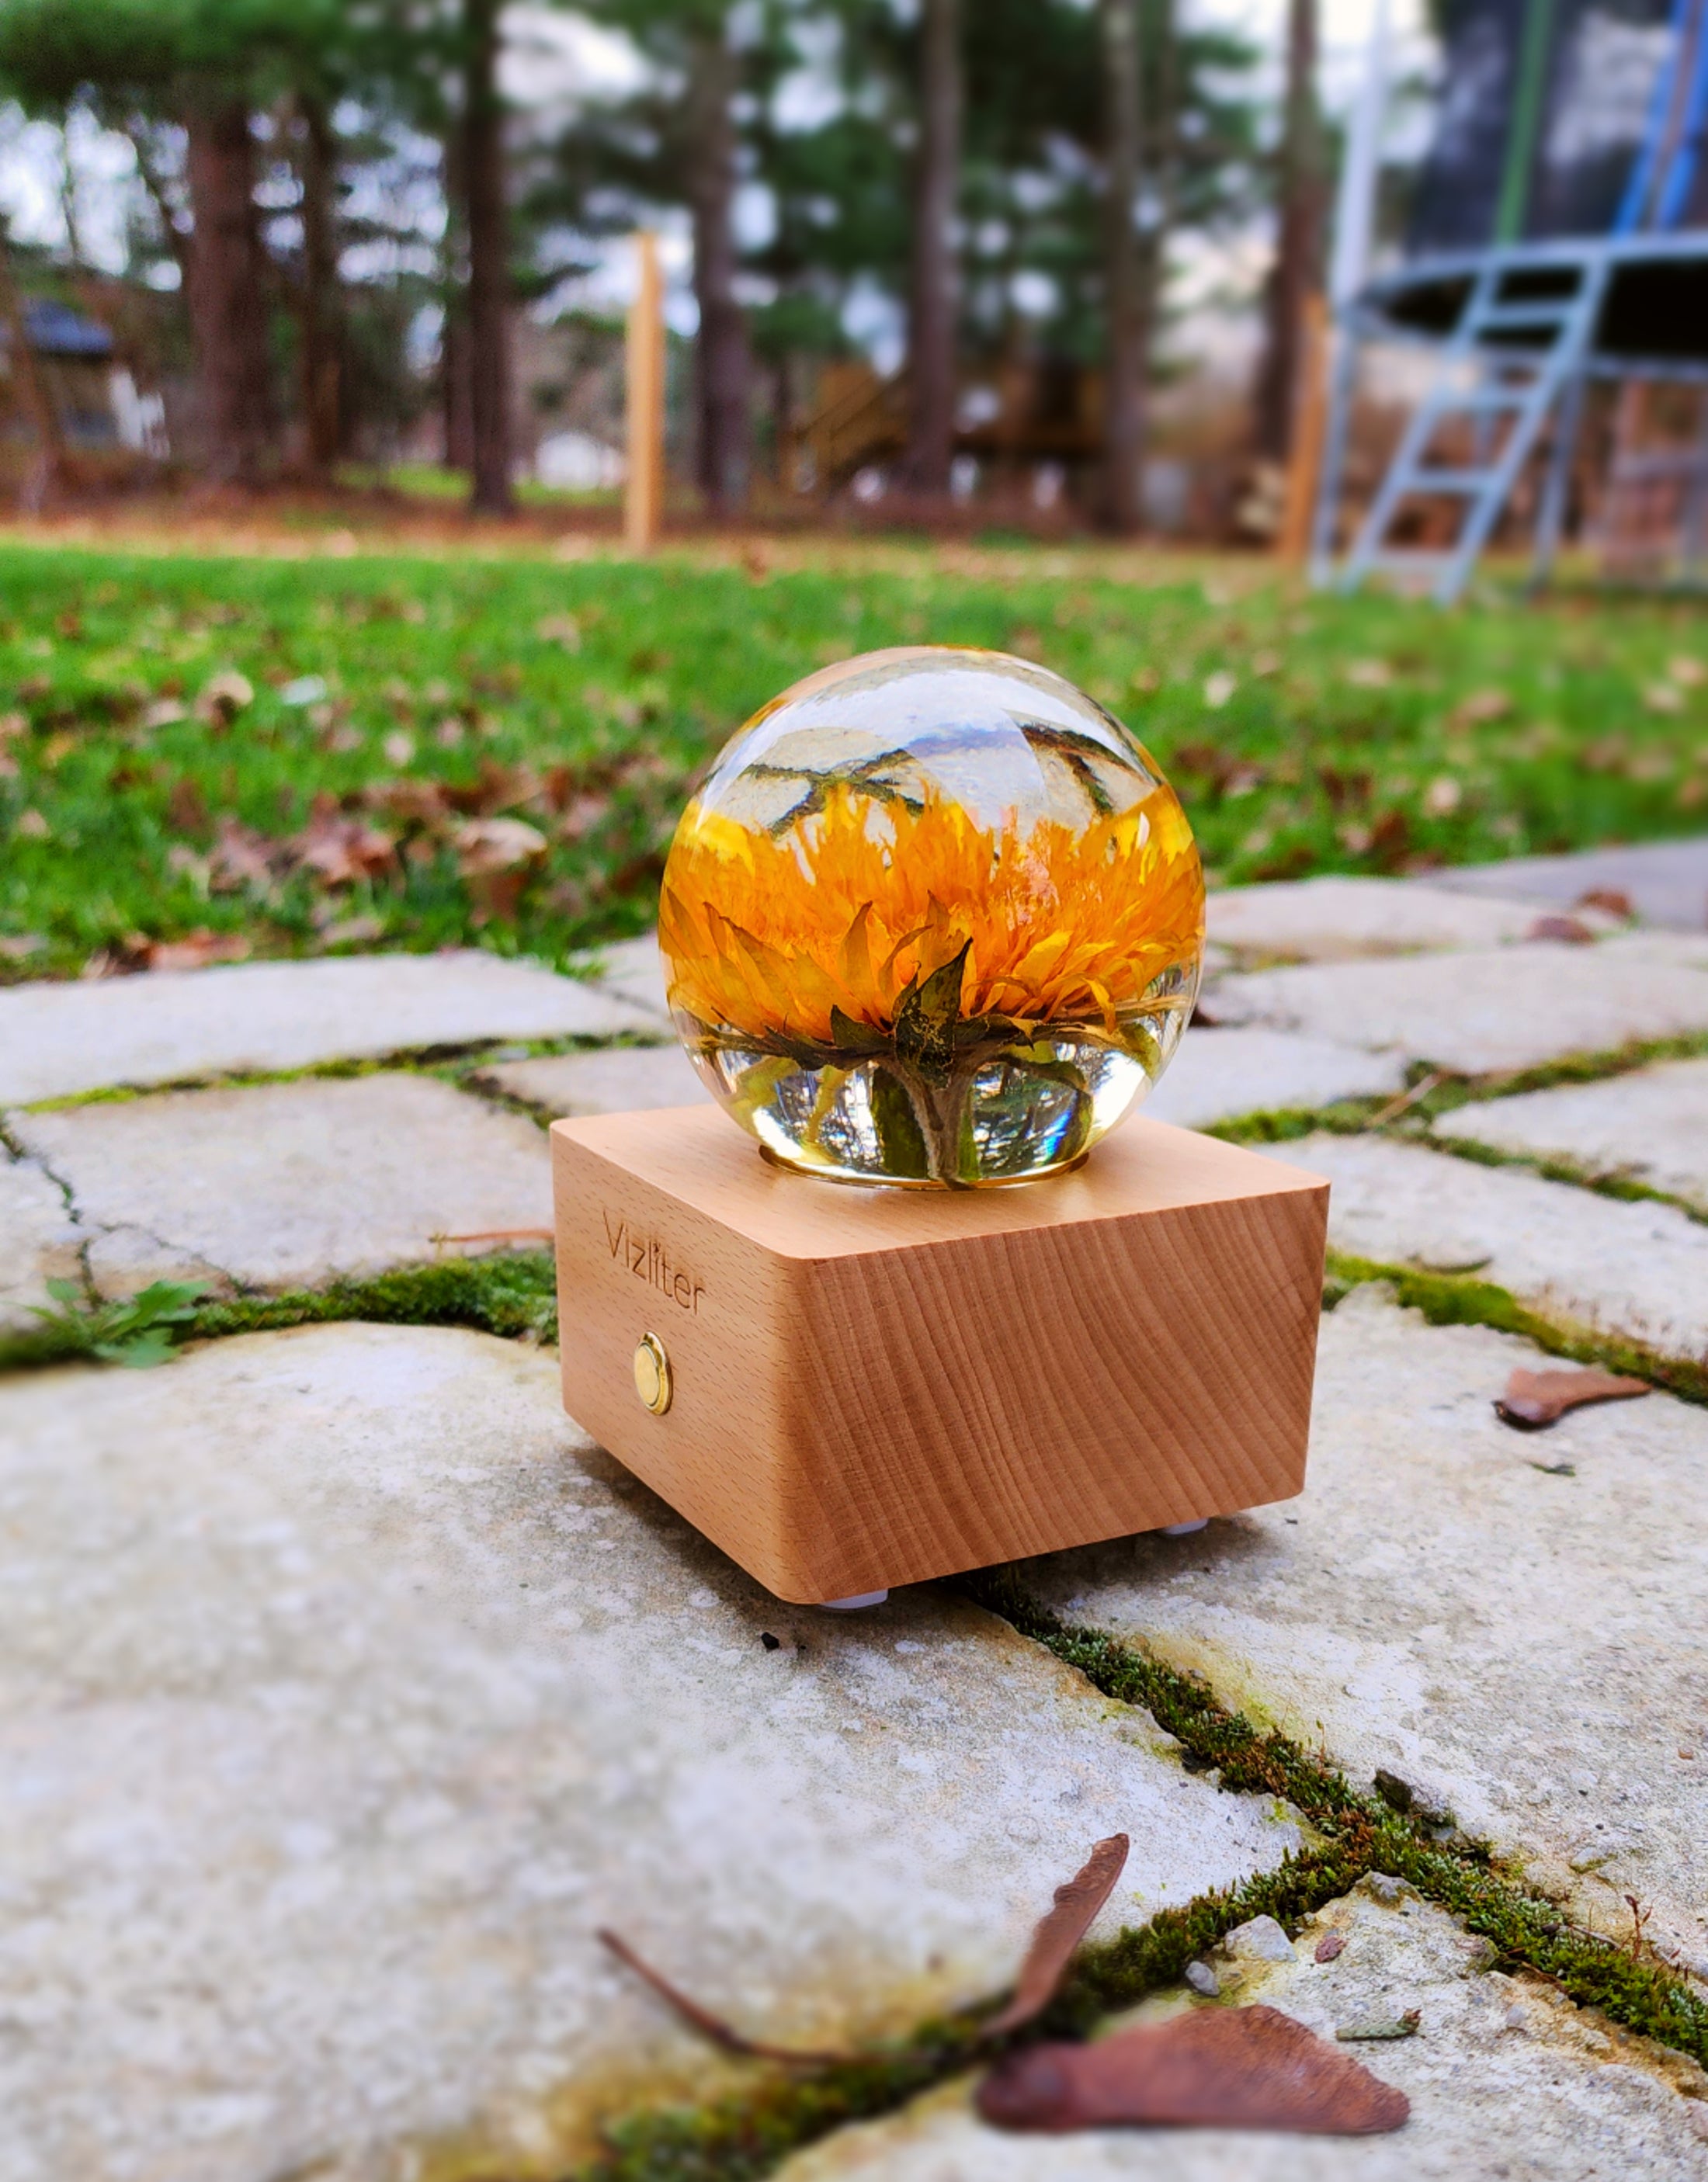 Vizliter Bluetooth Speaker Crystal Ball LED 80mm Lighting Premium Preserved Natural Flower with Wood Base Never Withered Eternal Night Light Sunflower